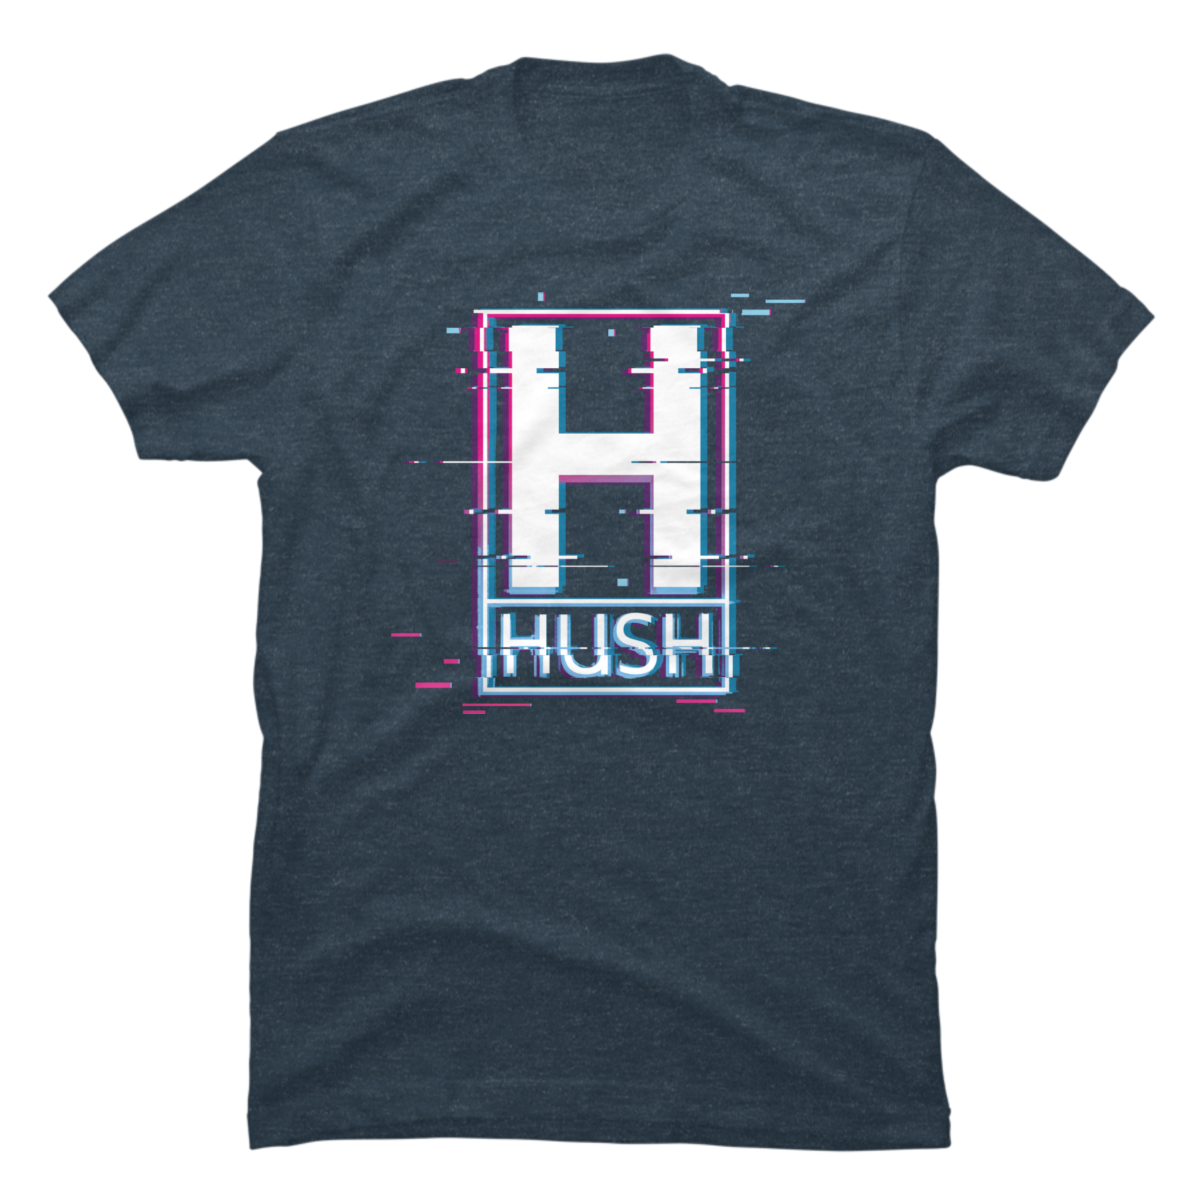 hush t shirts